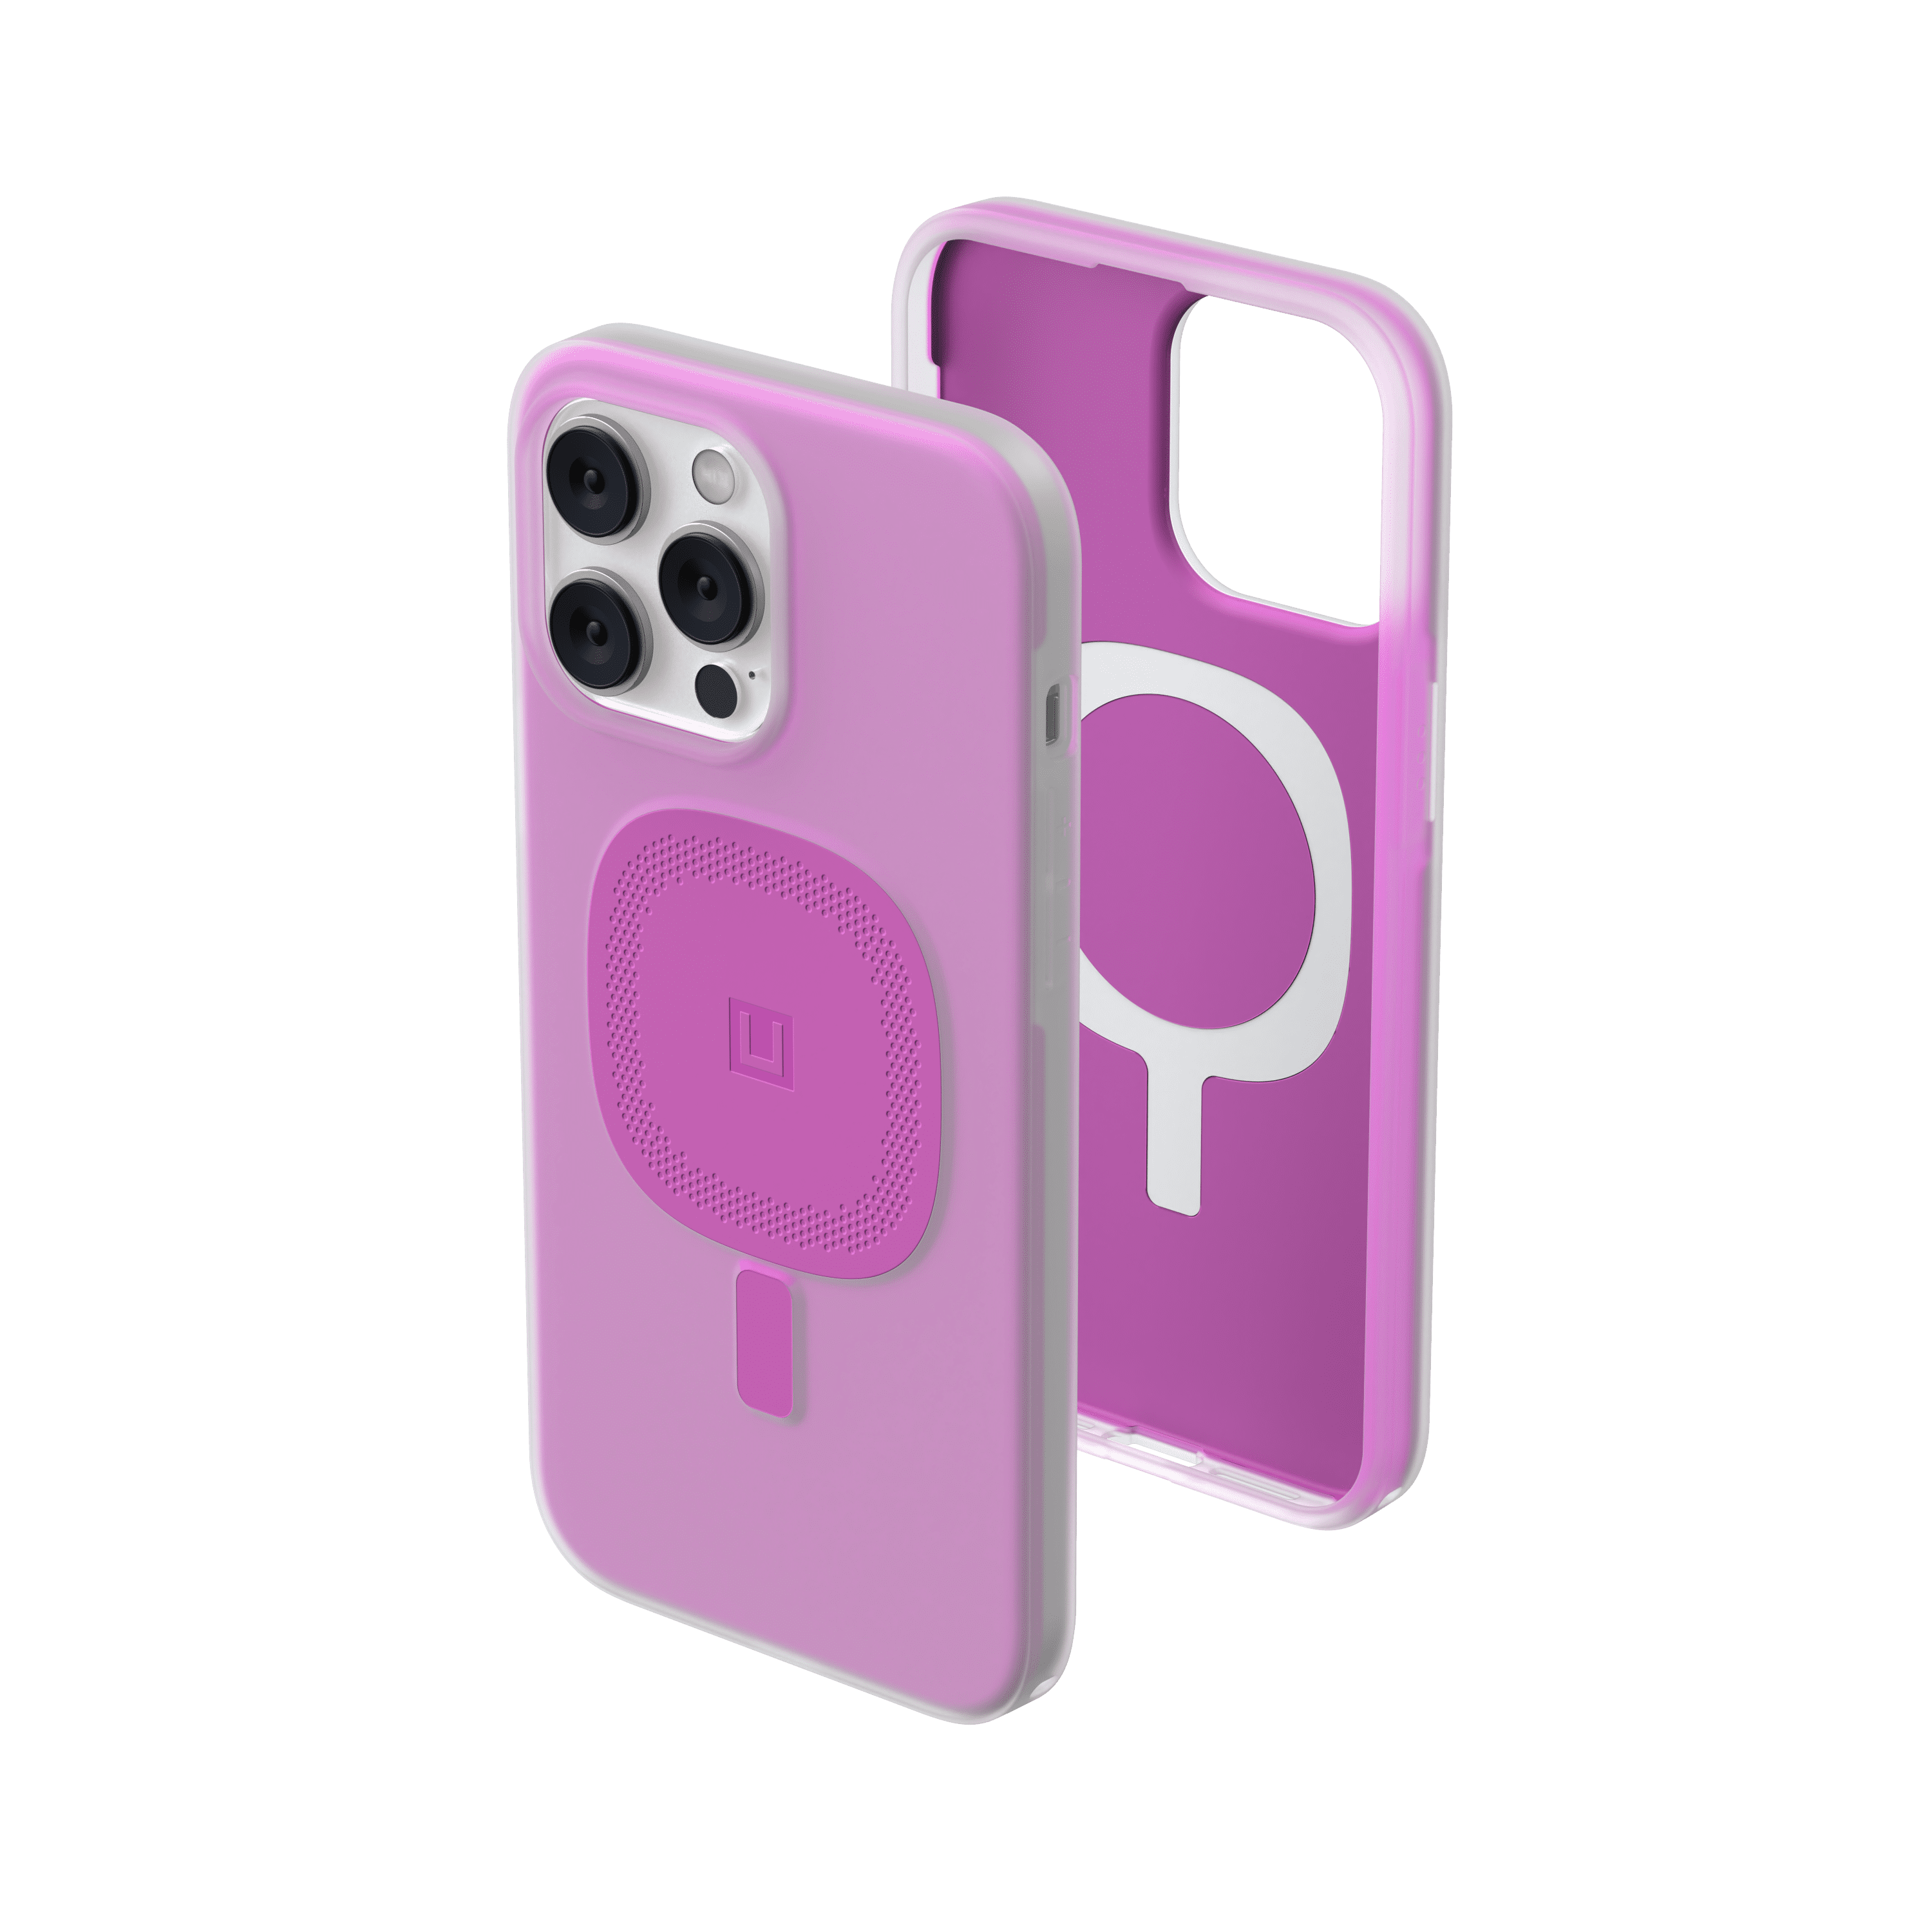 Pro Case - iPhone 12 Pro Max (Magnet Enabled) | SANDMARC